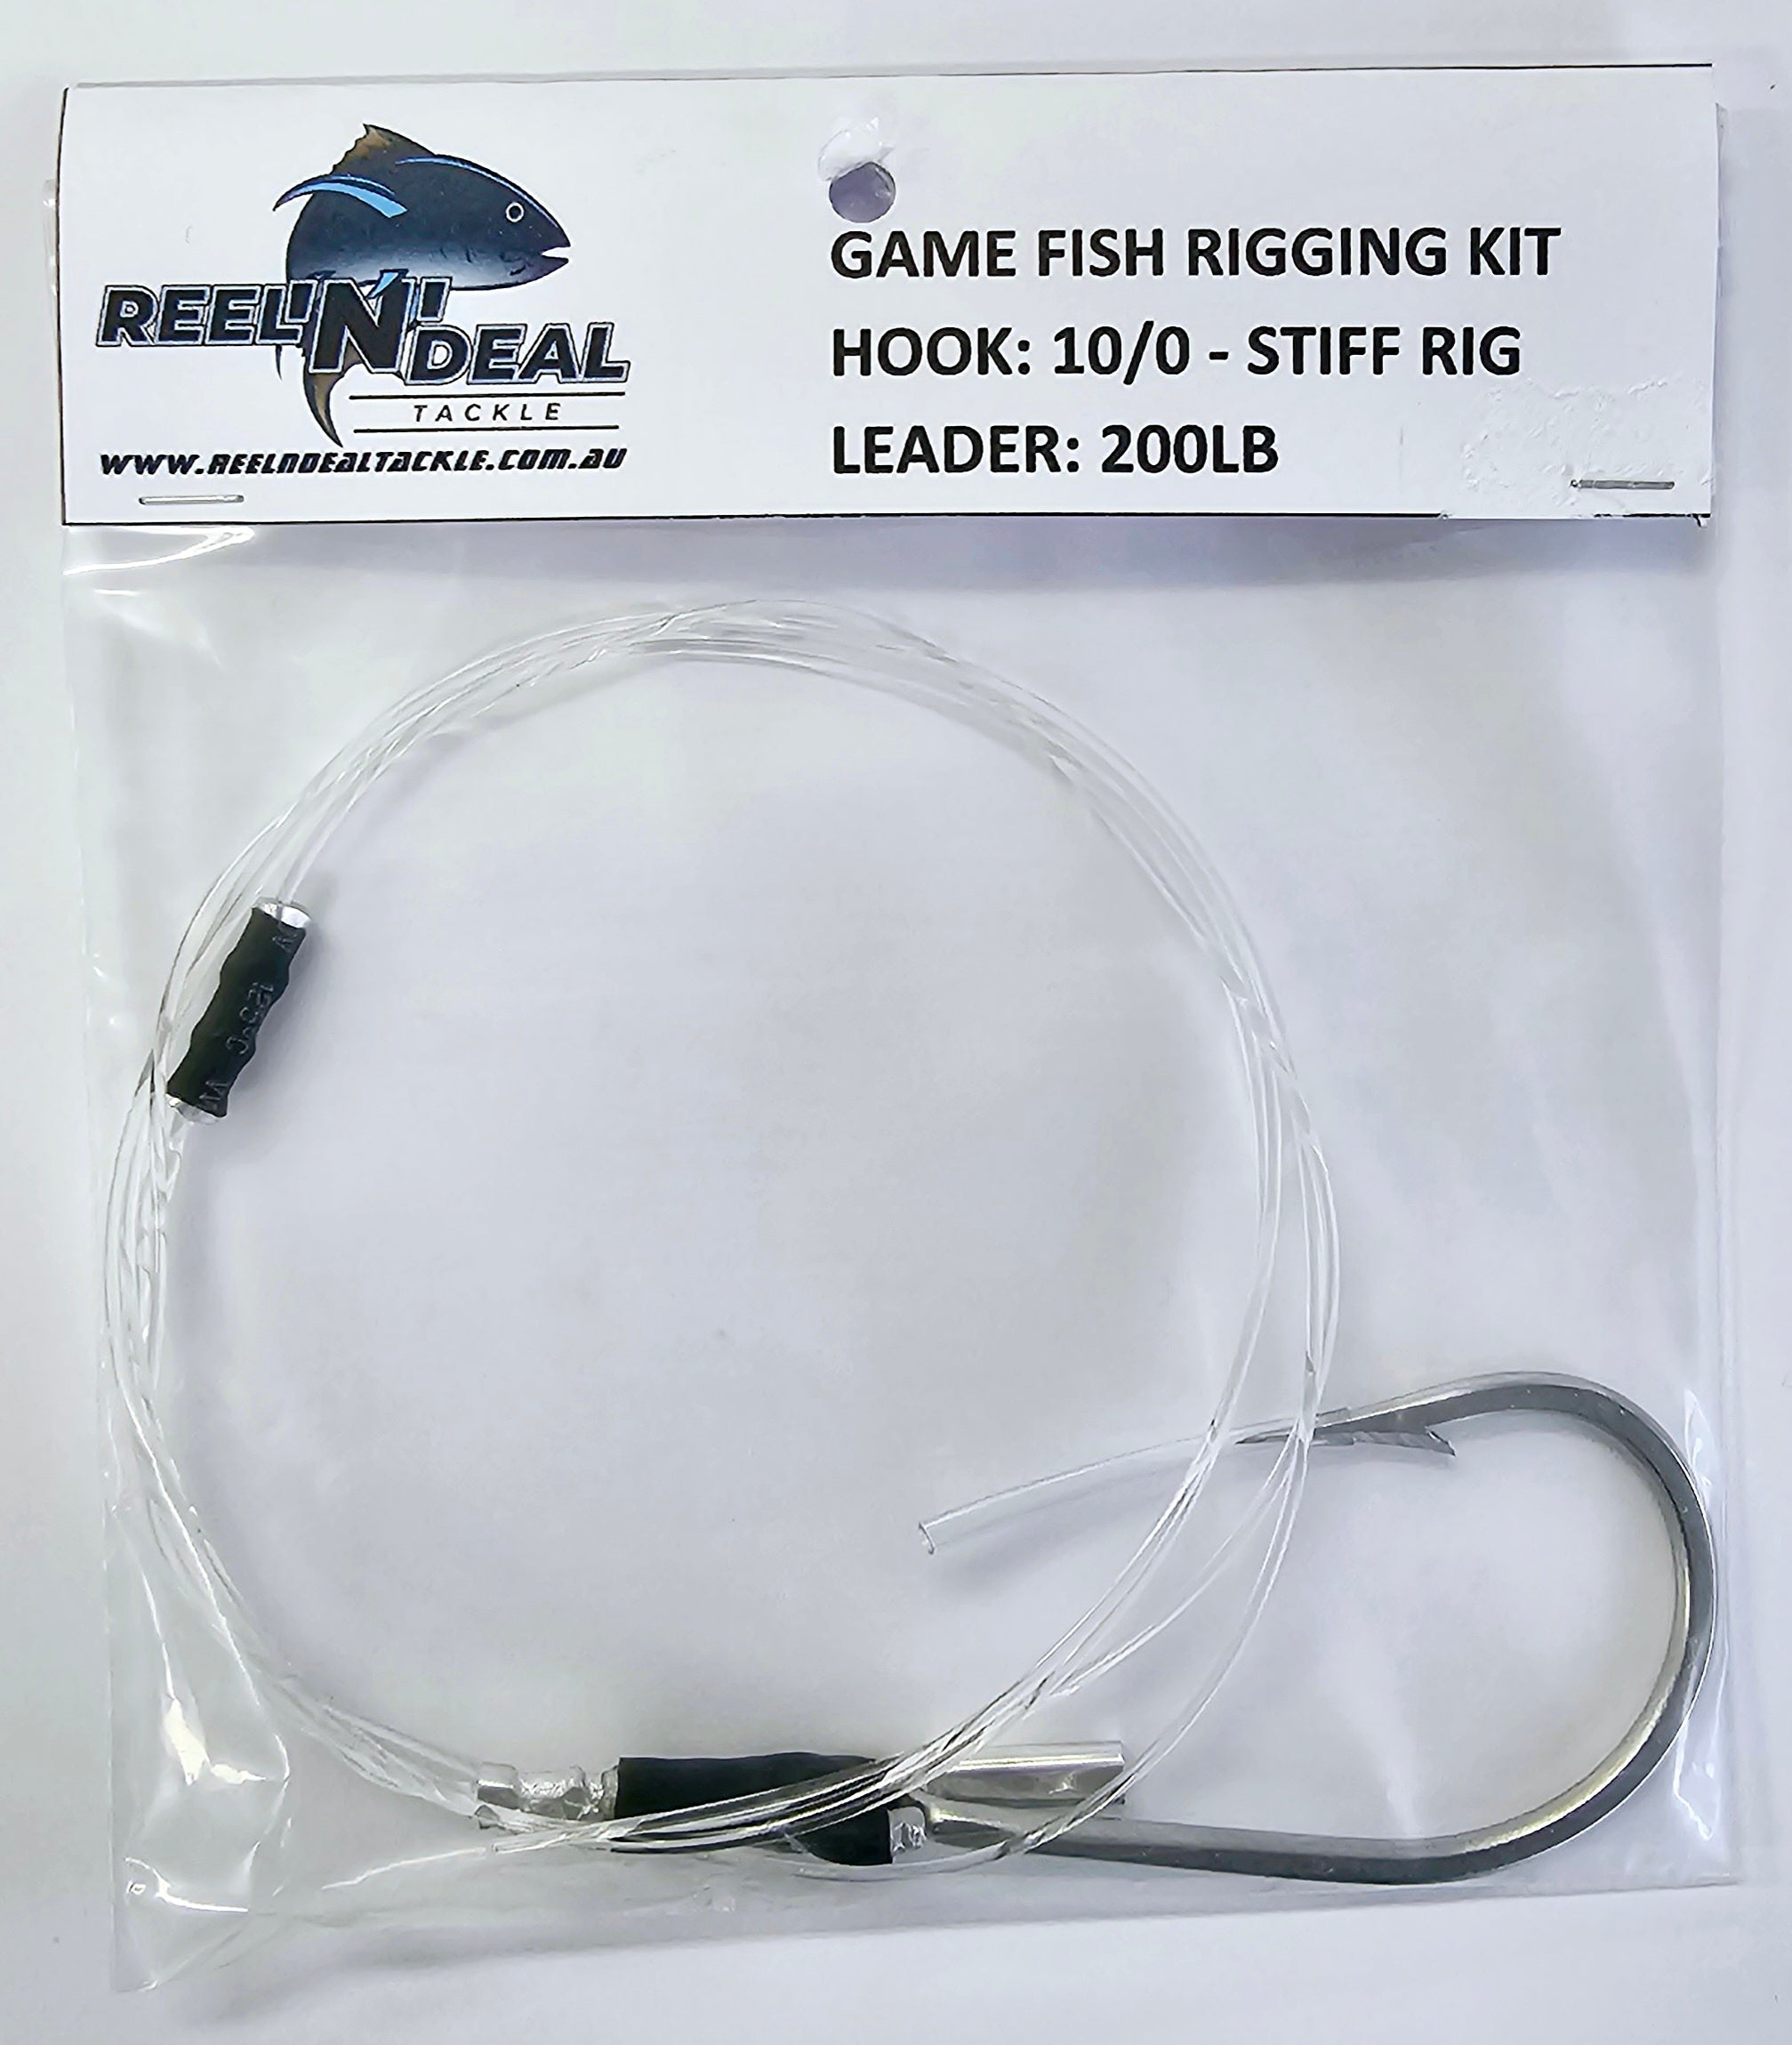 Tuna Rigging Pack 10/0 Stiff Rig Hook 200lb leader – REEL 'N' DEAL TACKLE